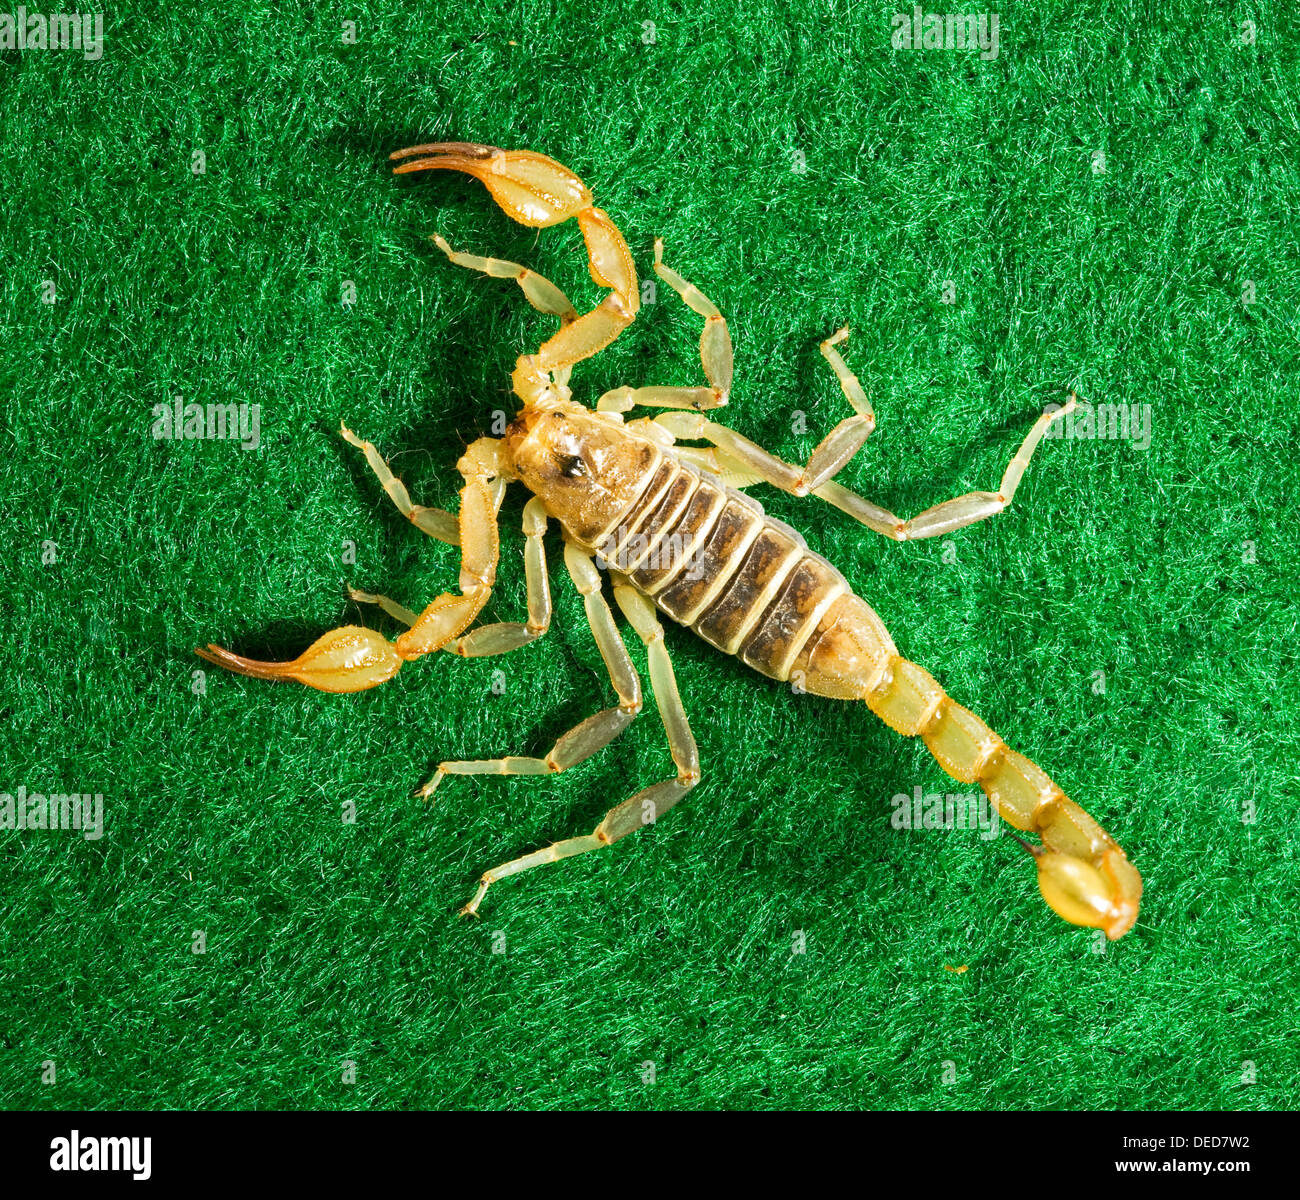 Paruroctonus boreus, northern, scorpion Stock Photo - Alamy